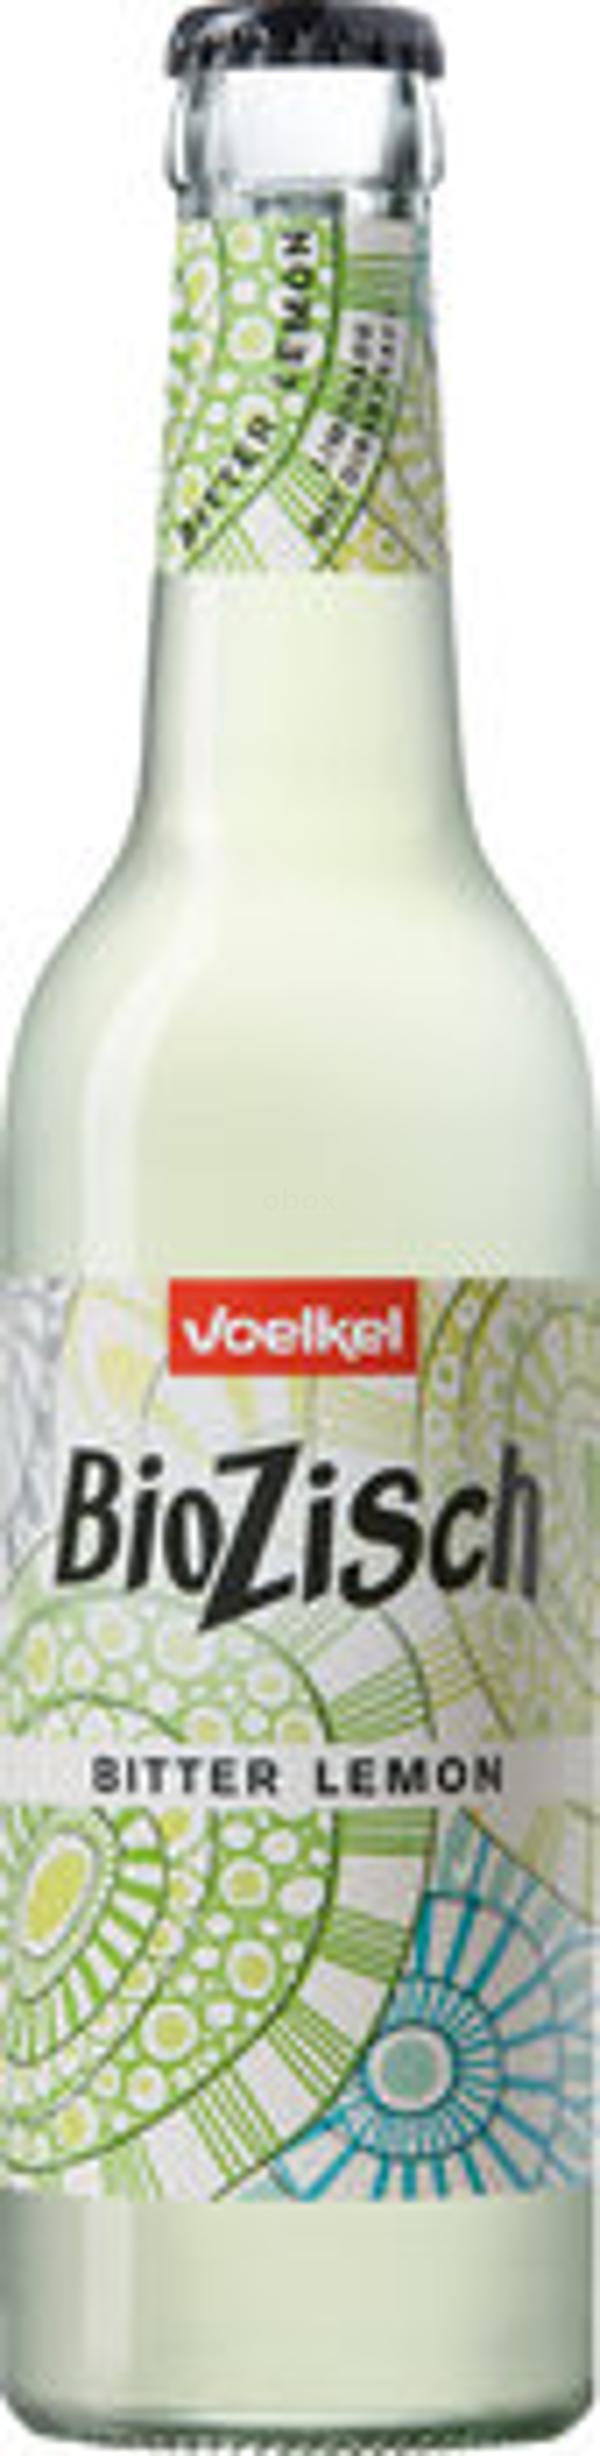 Produktfoto zu BioZisch Bitter Lemon, 0,33 l